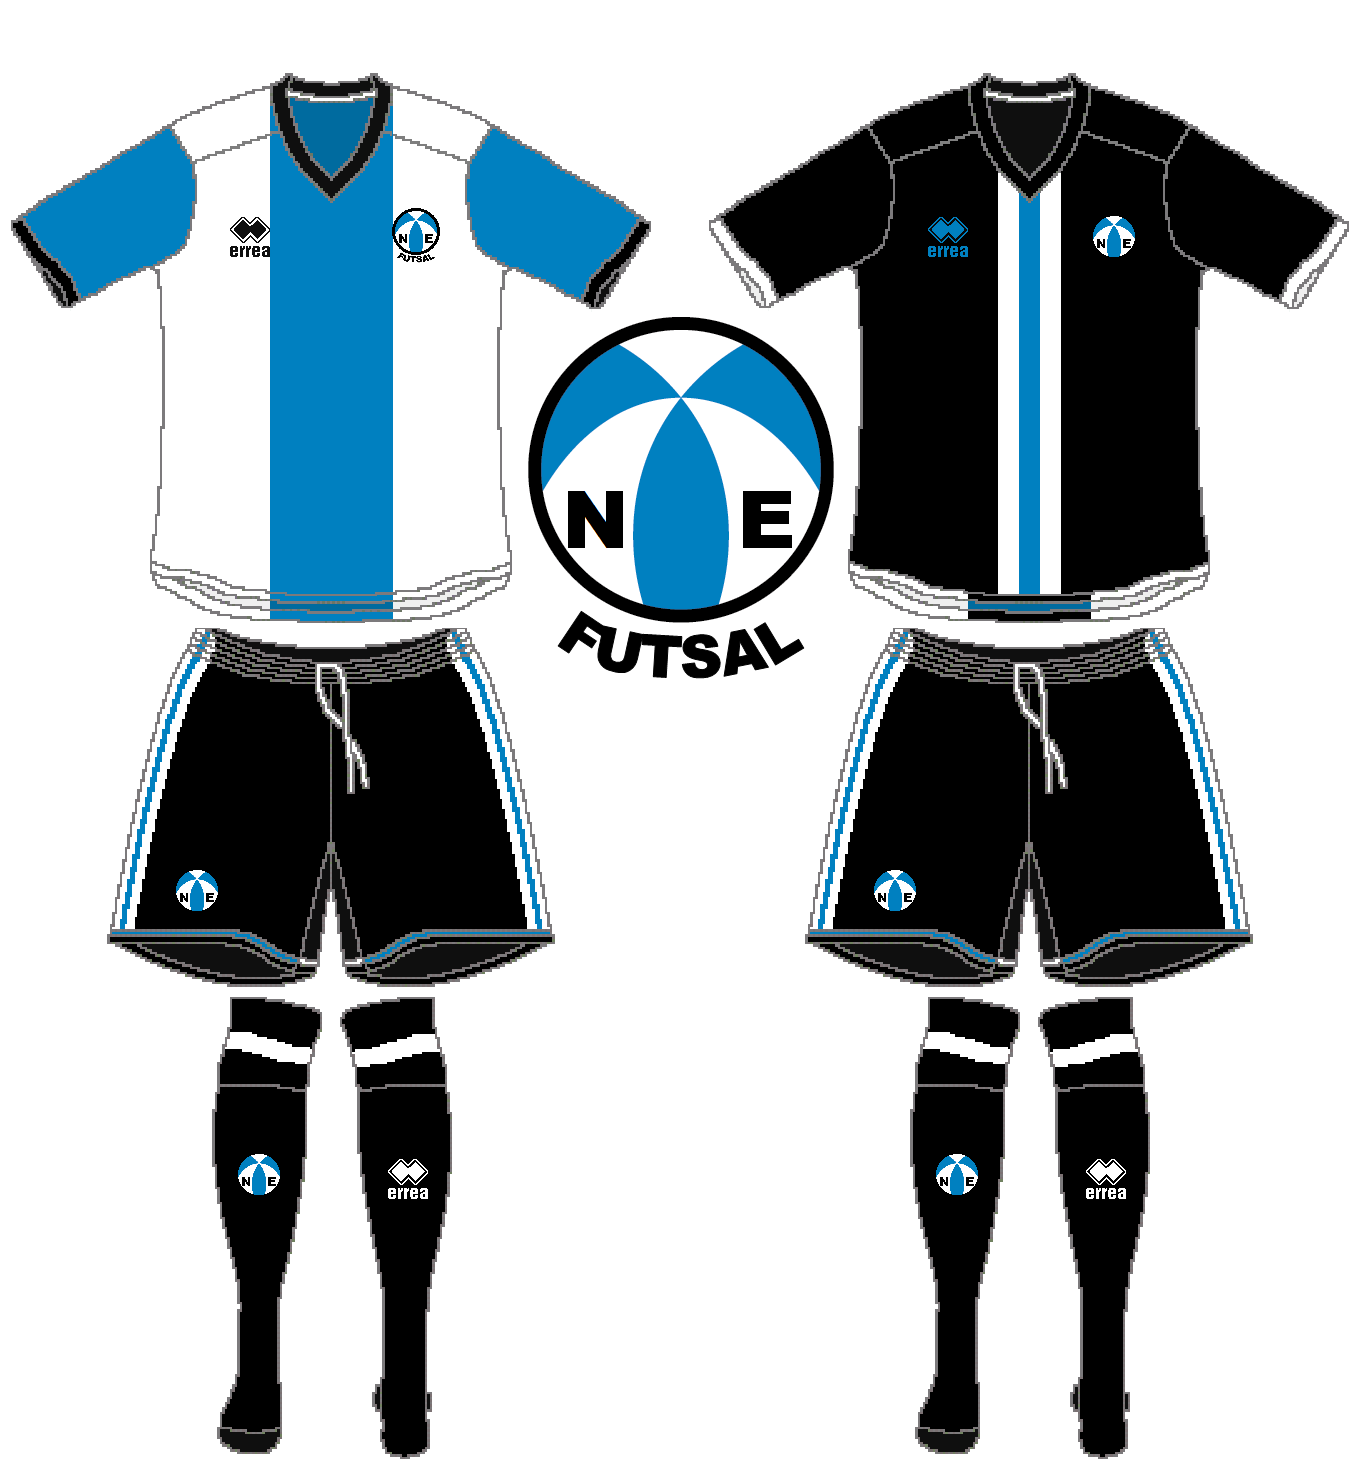 North East Futsal Crest Winner Announced | Logo design | News